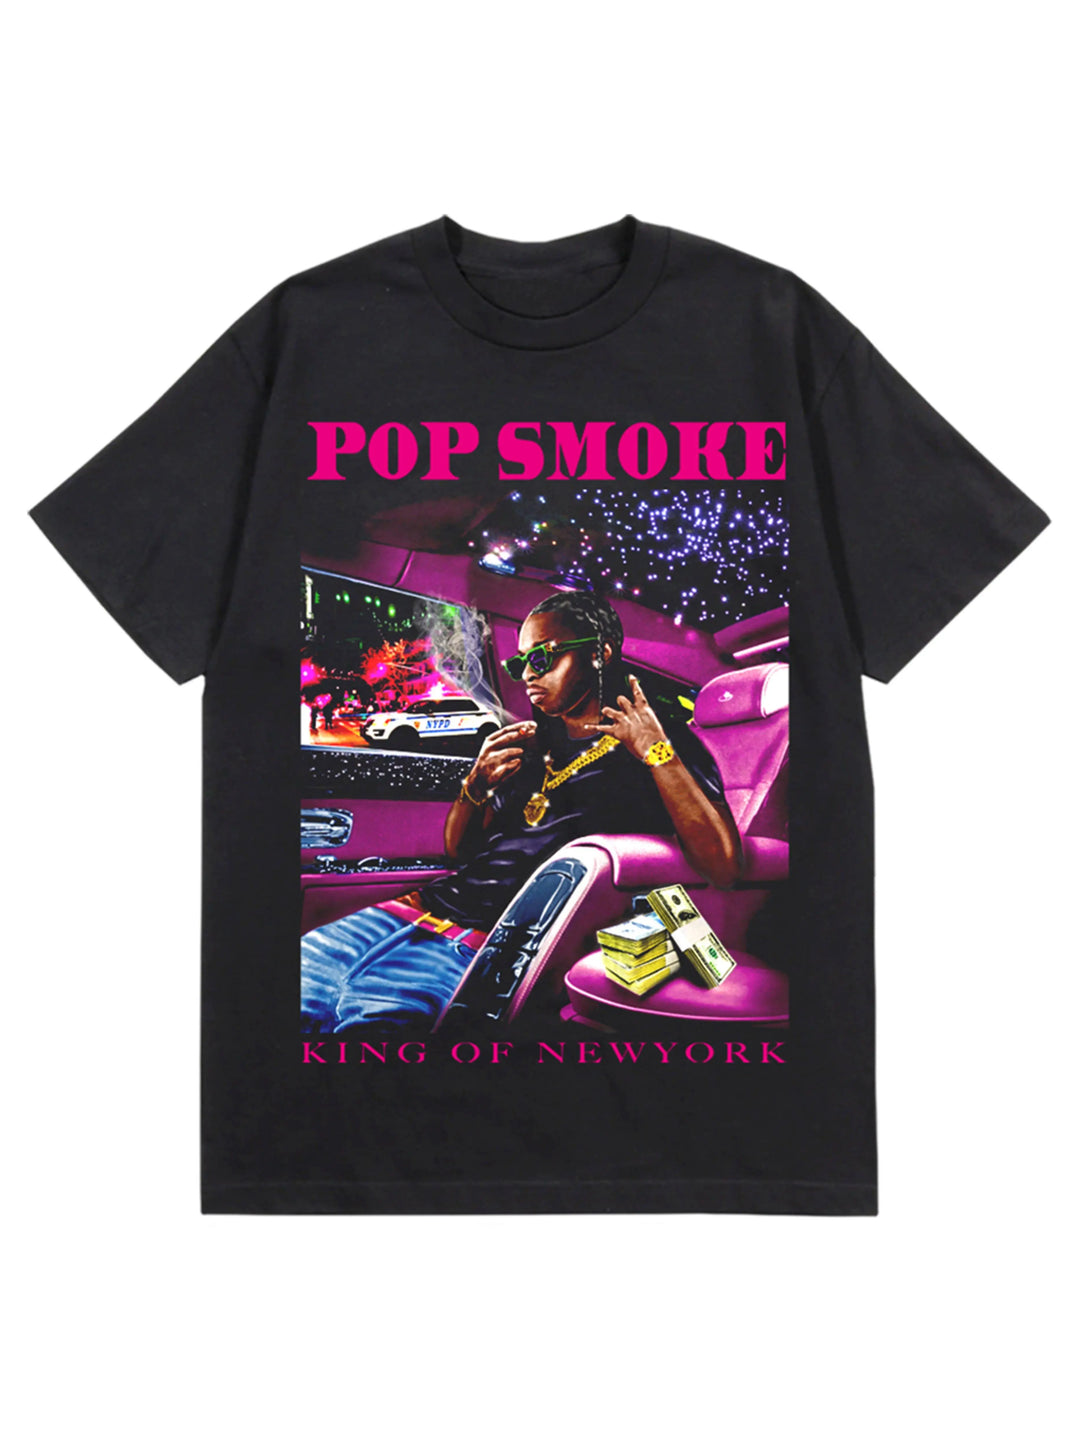 Vlone x Pop Smoke King of New York Tee Black Prior